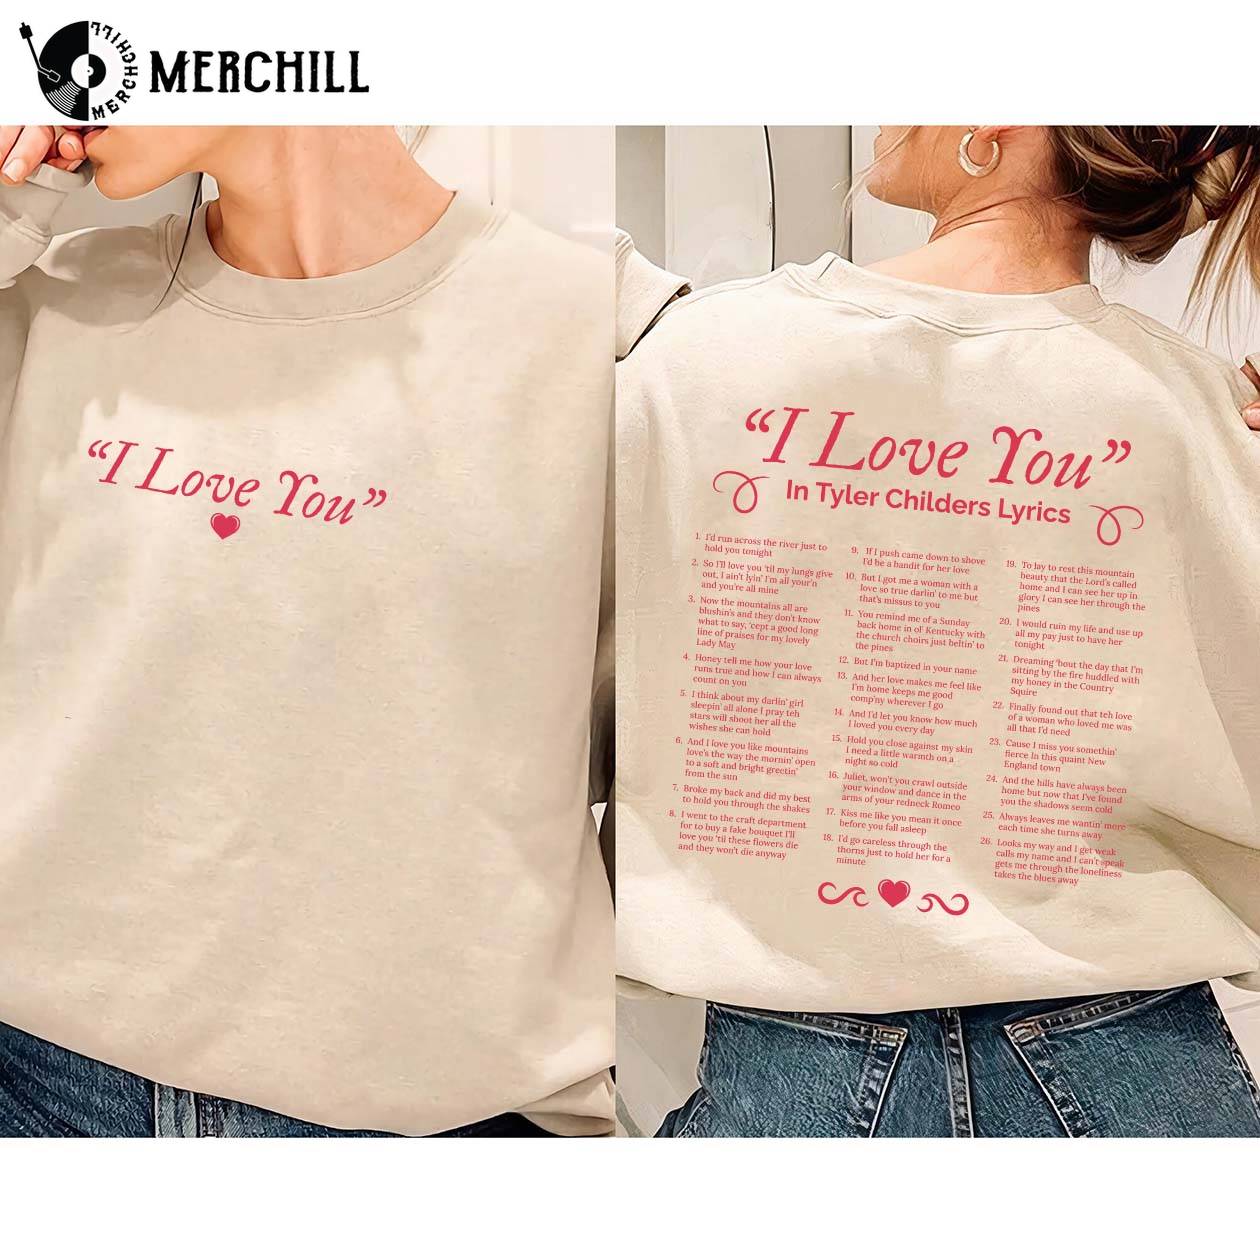 Lyrics Mac Miller Men's T-Shirts for Sale